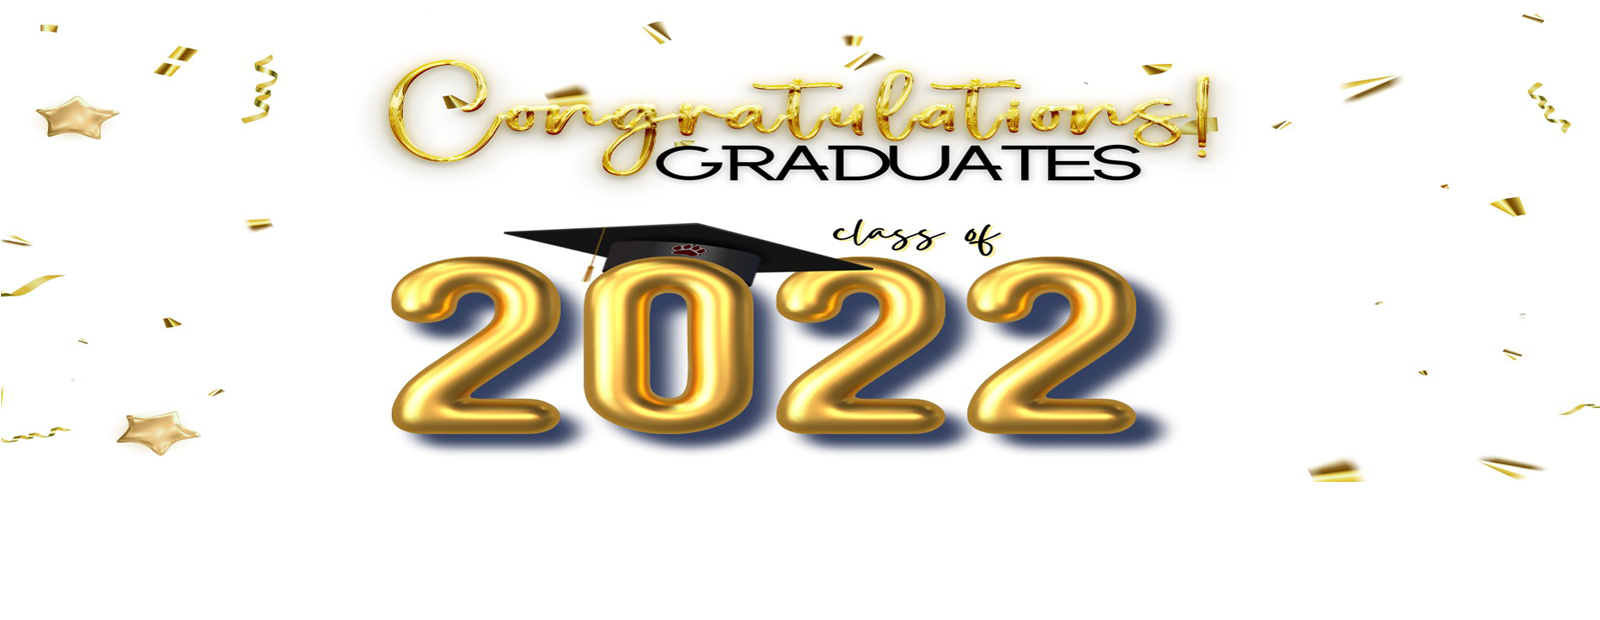 Congratulations Class of 2021-22